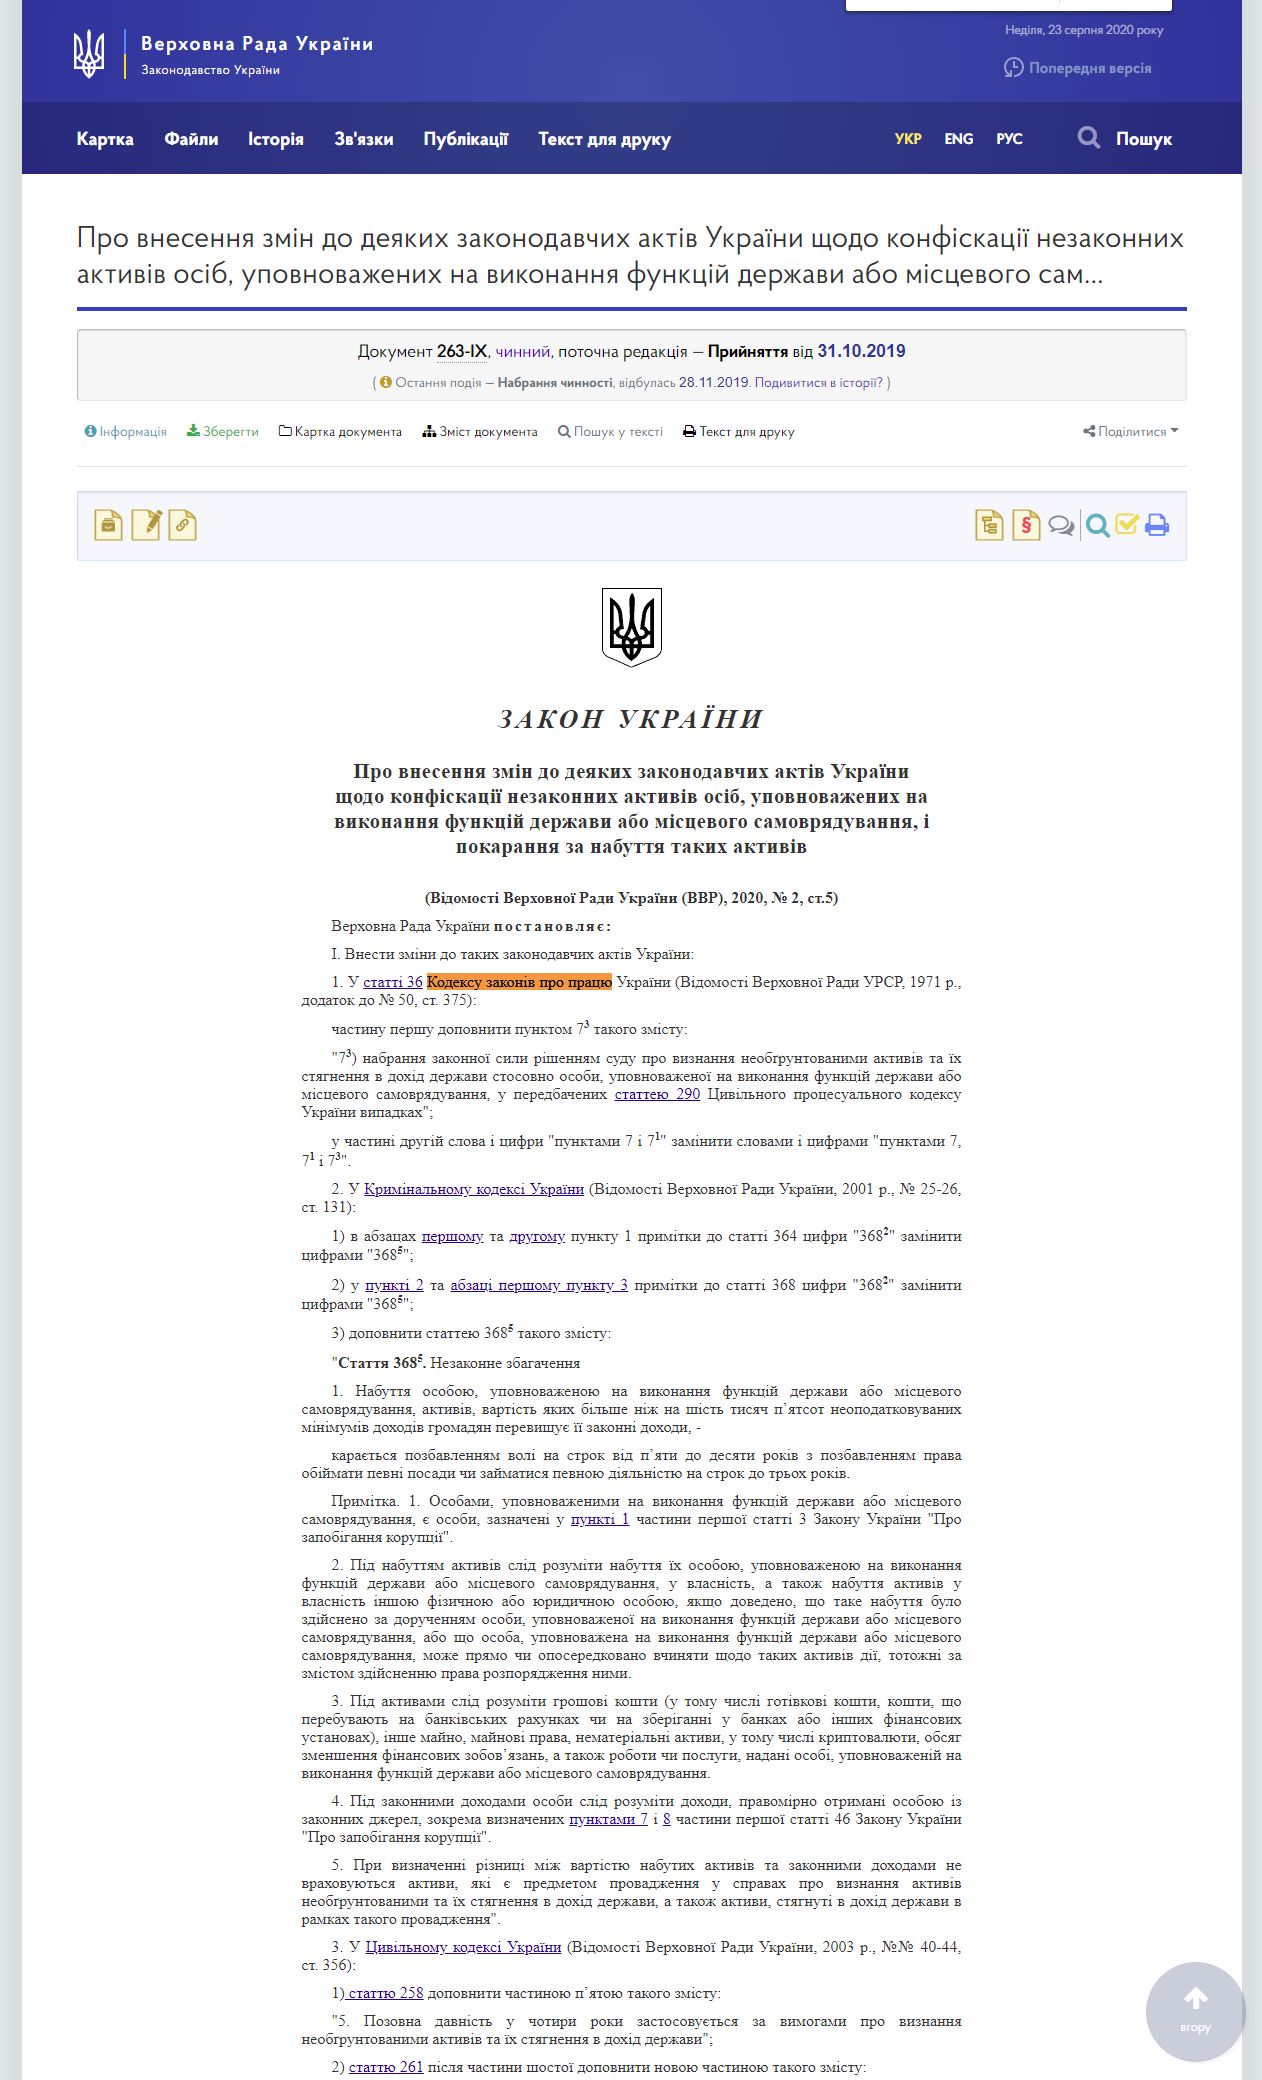 https://zakon.rada.gov.ua/laws/show/263-20#n6